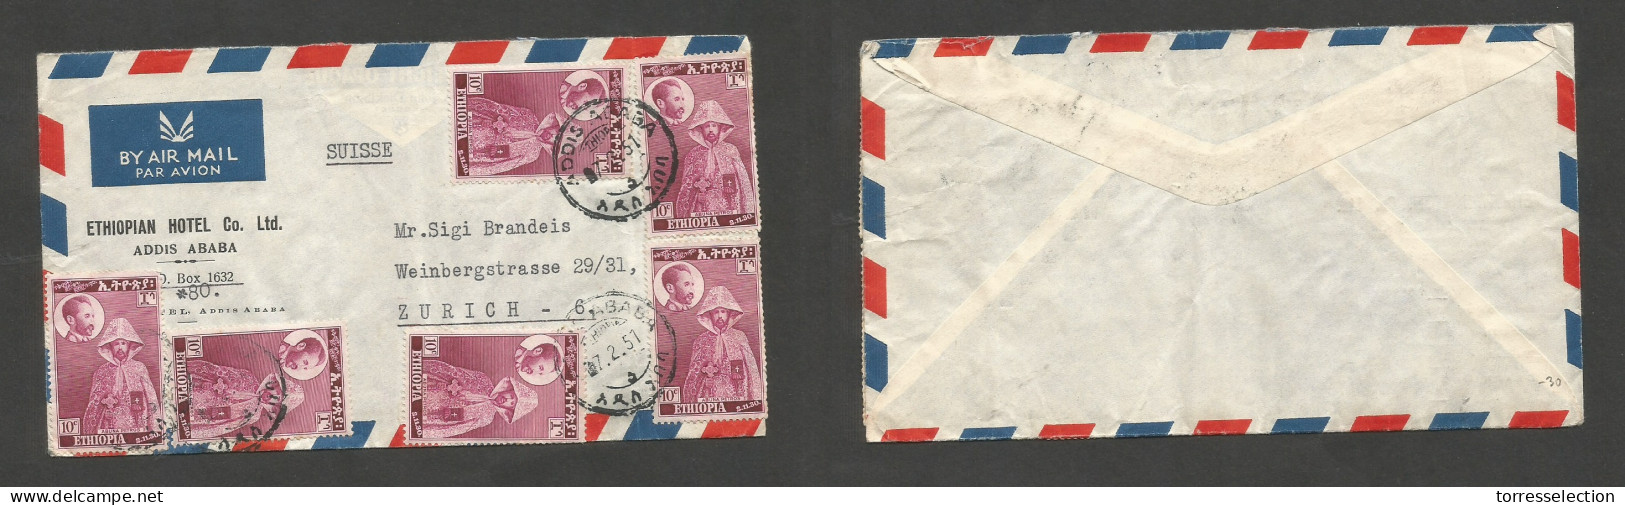 ETHIOPIA. 1951 (7 Febr) Addis Ababa - Zurich, Switzerland. Air Multifkd Env, Tied Cds, At 60c Rate. V. Appealing. - Ethiopie